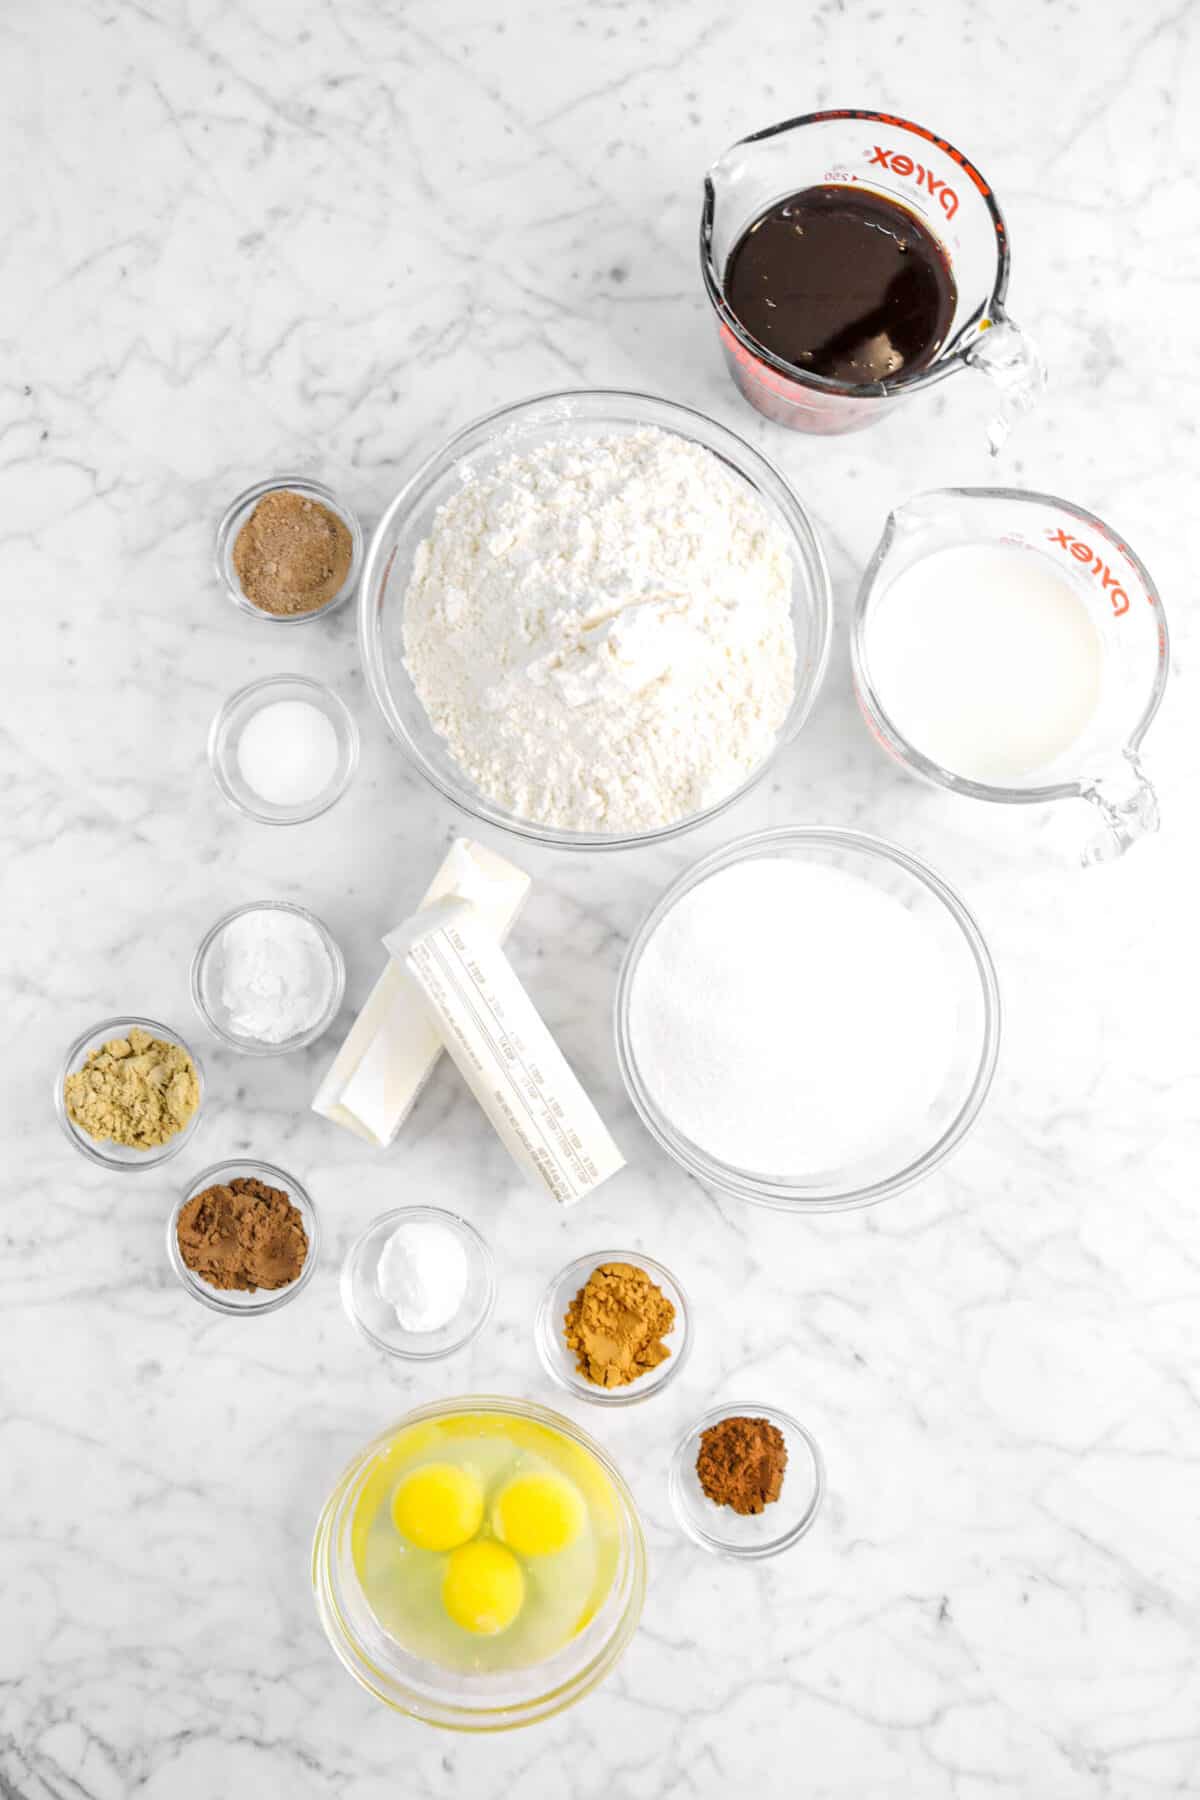 molasses, flour, nutmeg, salt, baking power, ginger, all spice, baking powder, cinnamon, cloves, butter, sugar, milk, and eggs on a marble counter